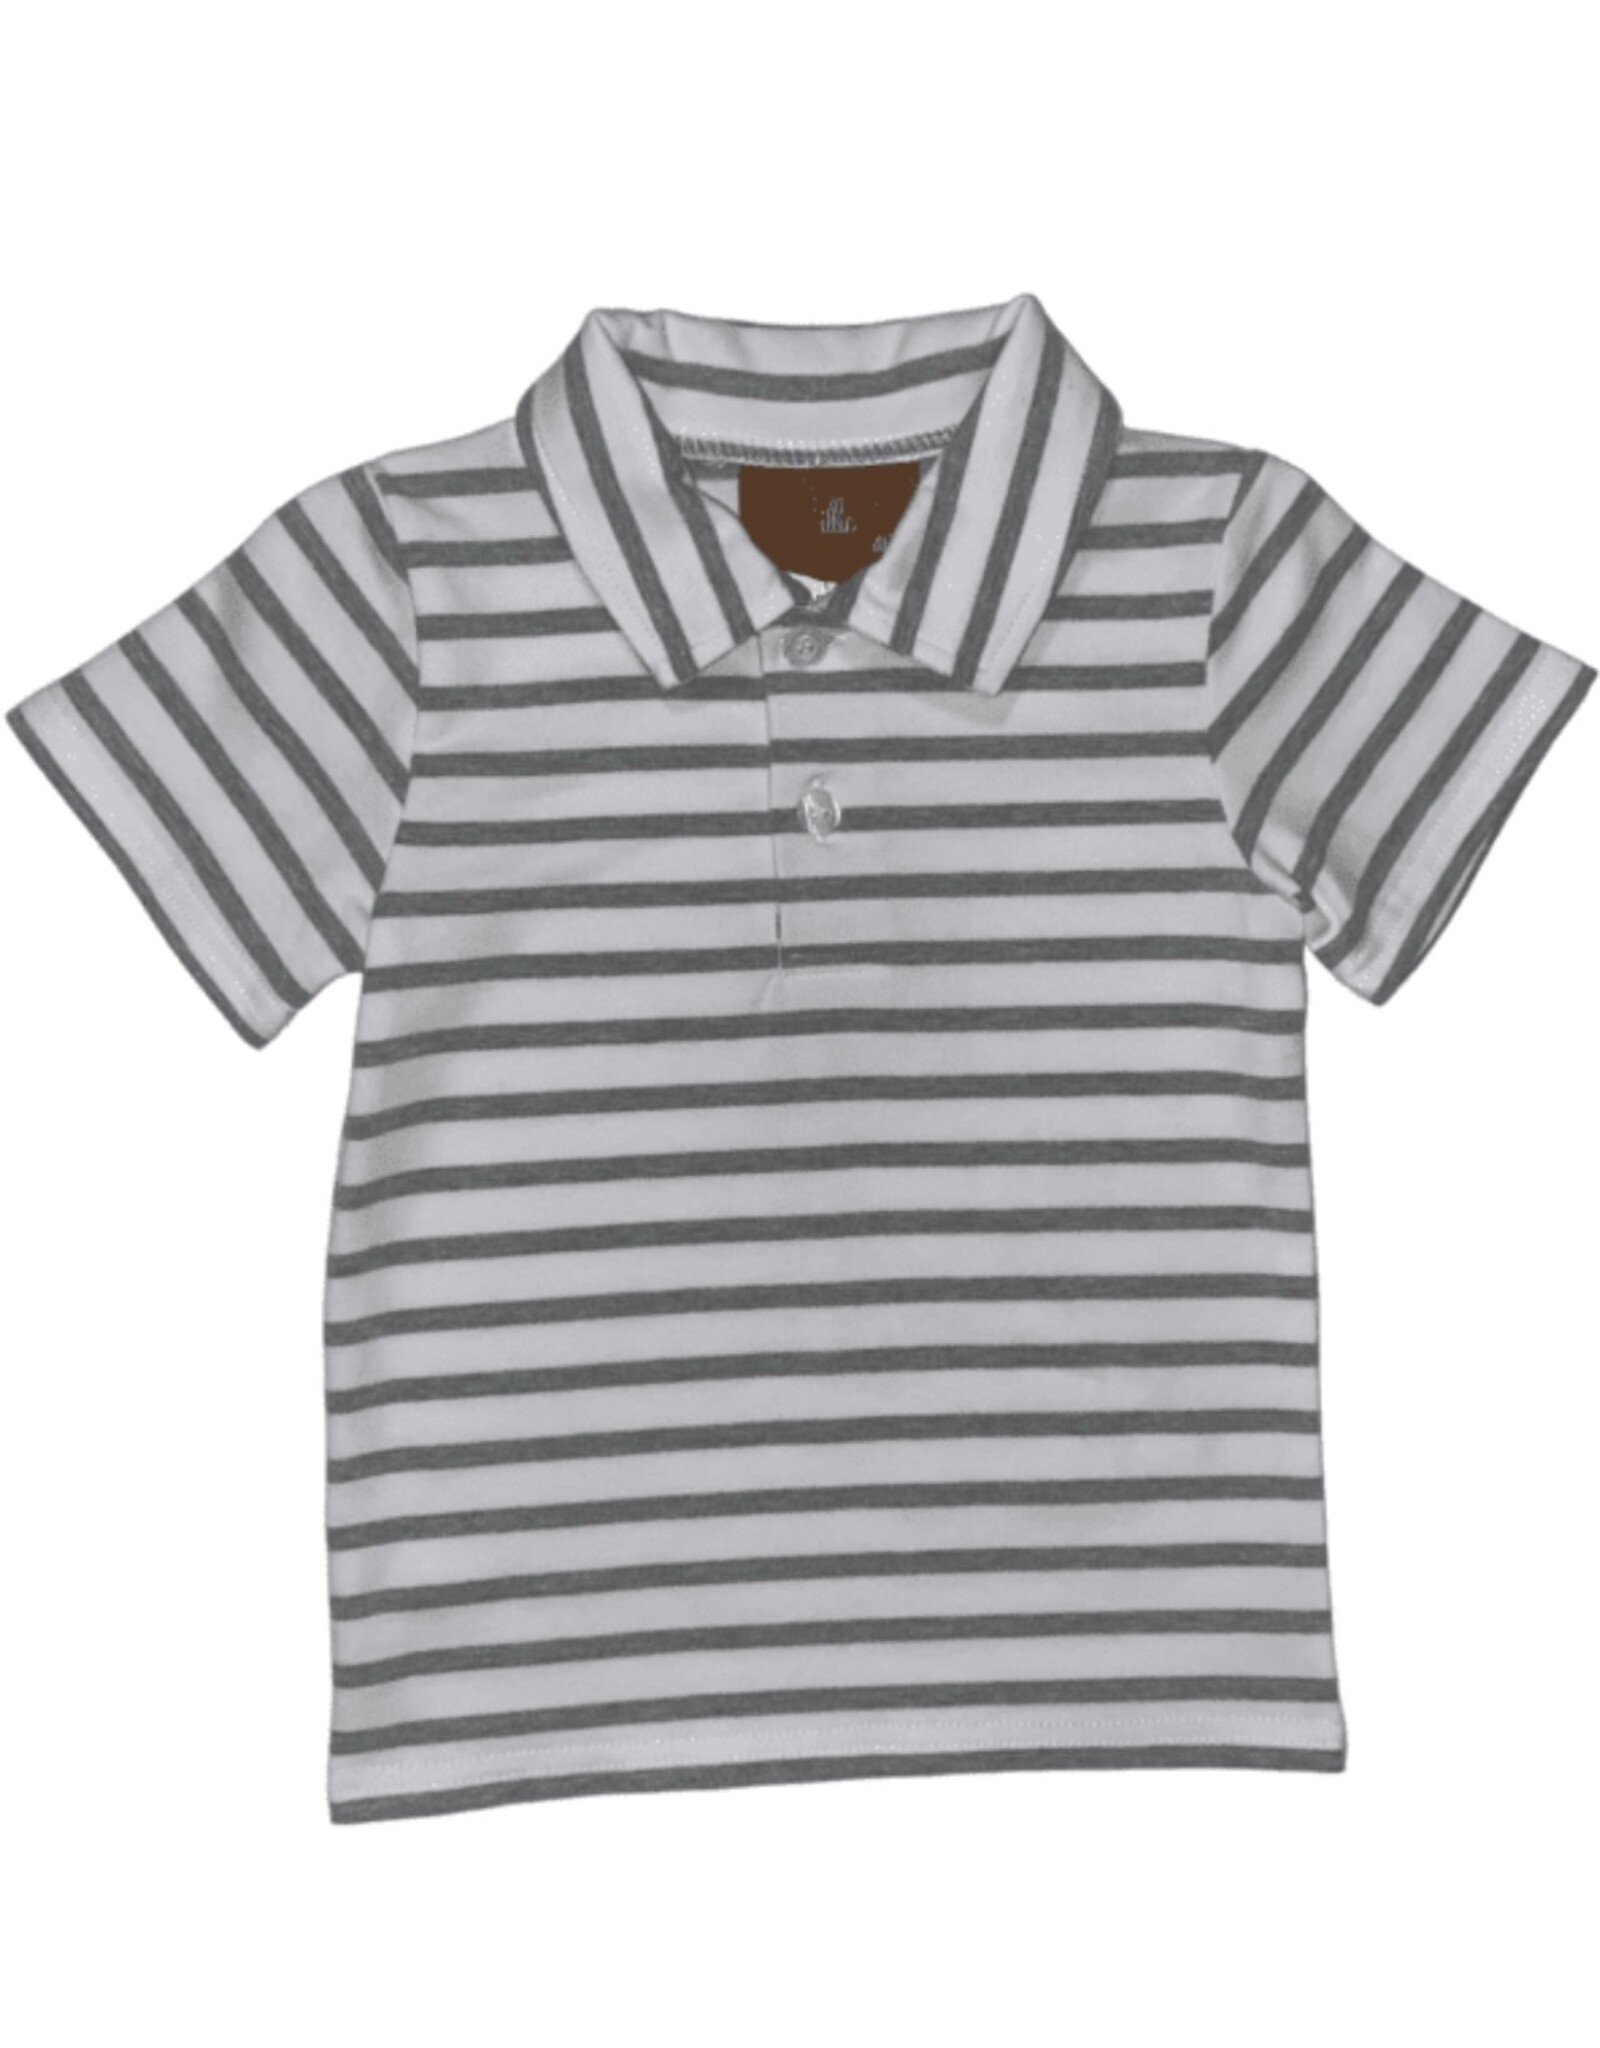 Millie Jay Millie Jay- Bennett Shirt: Grey Stripe